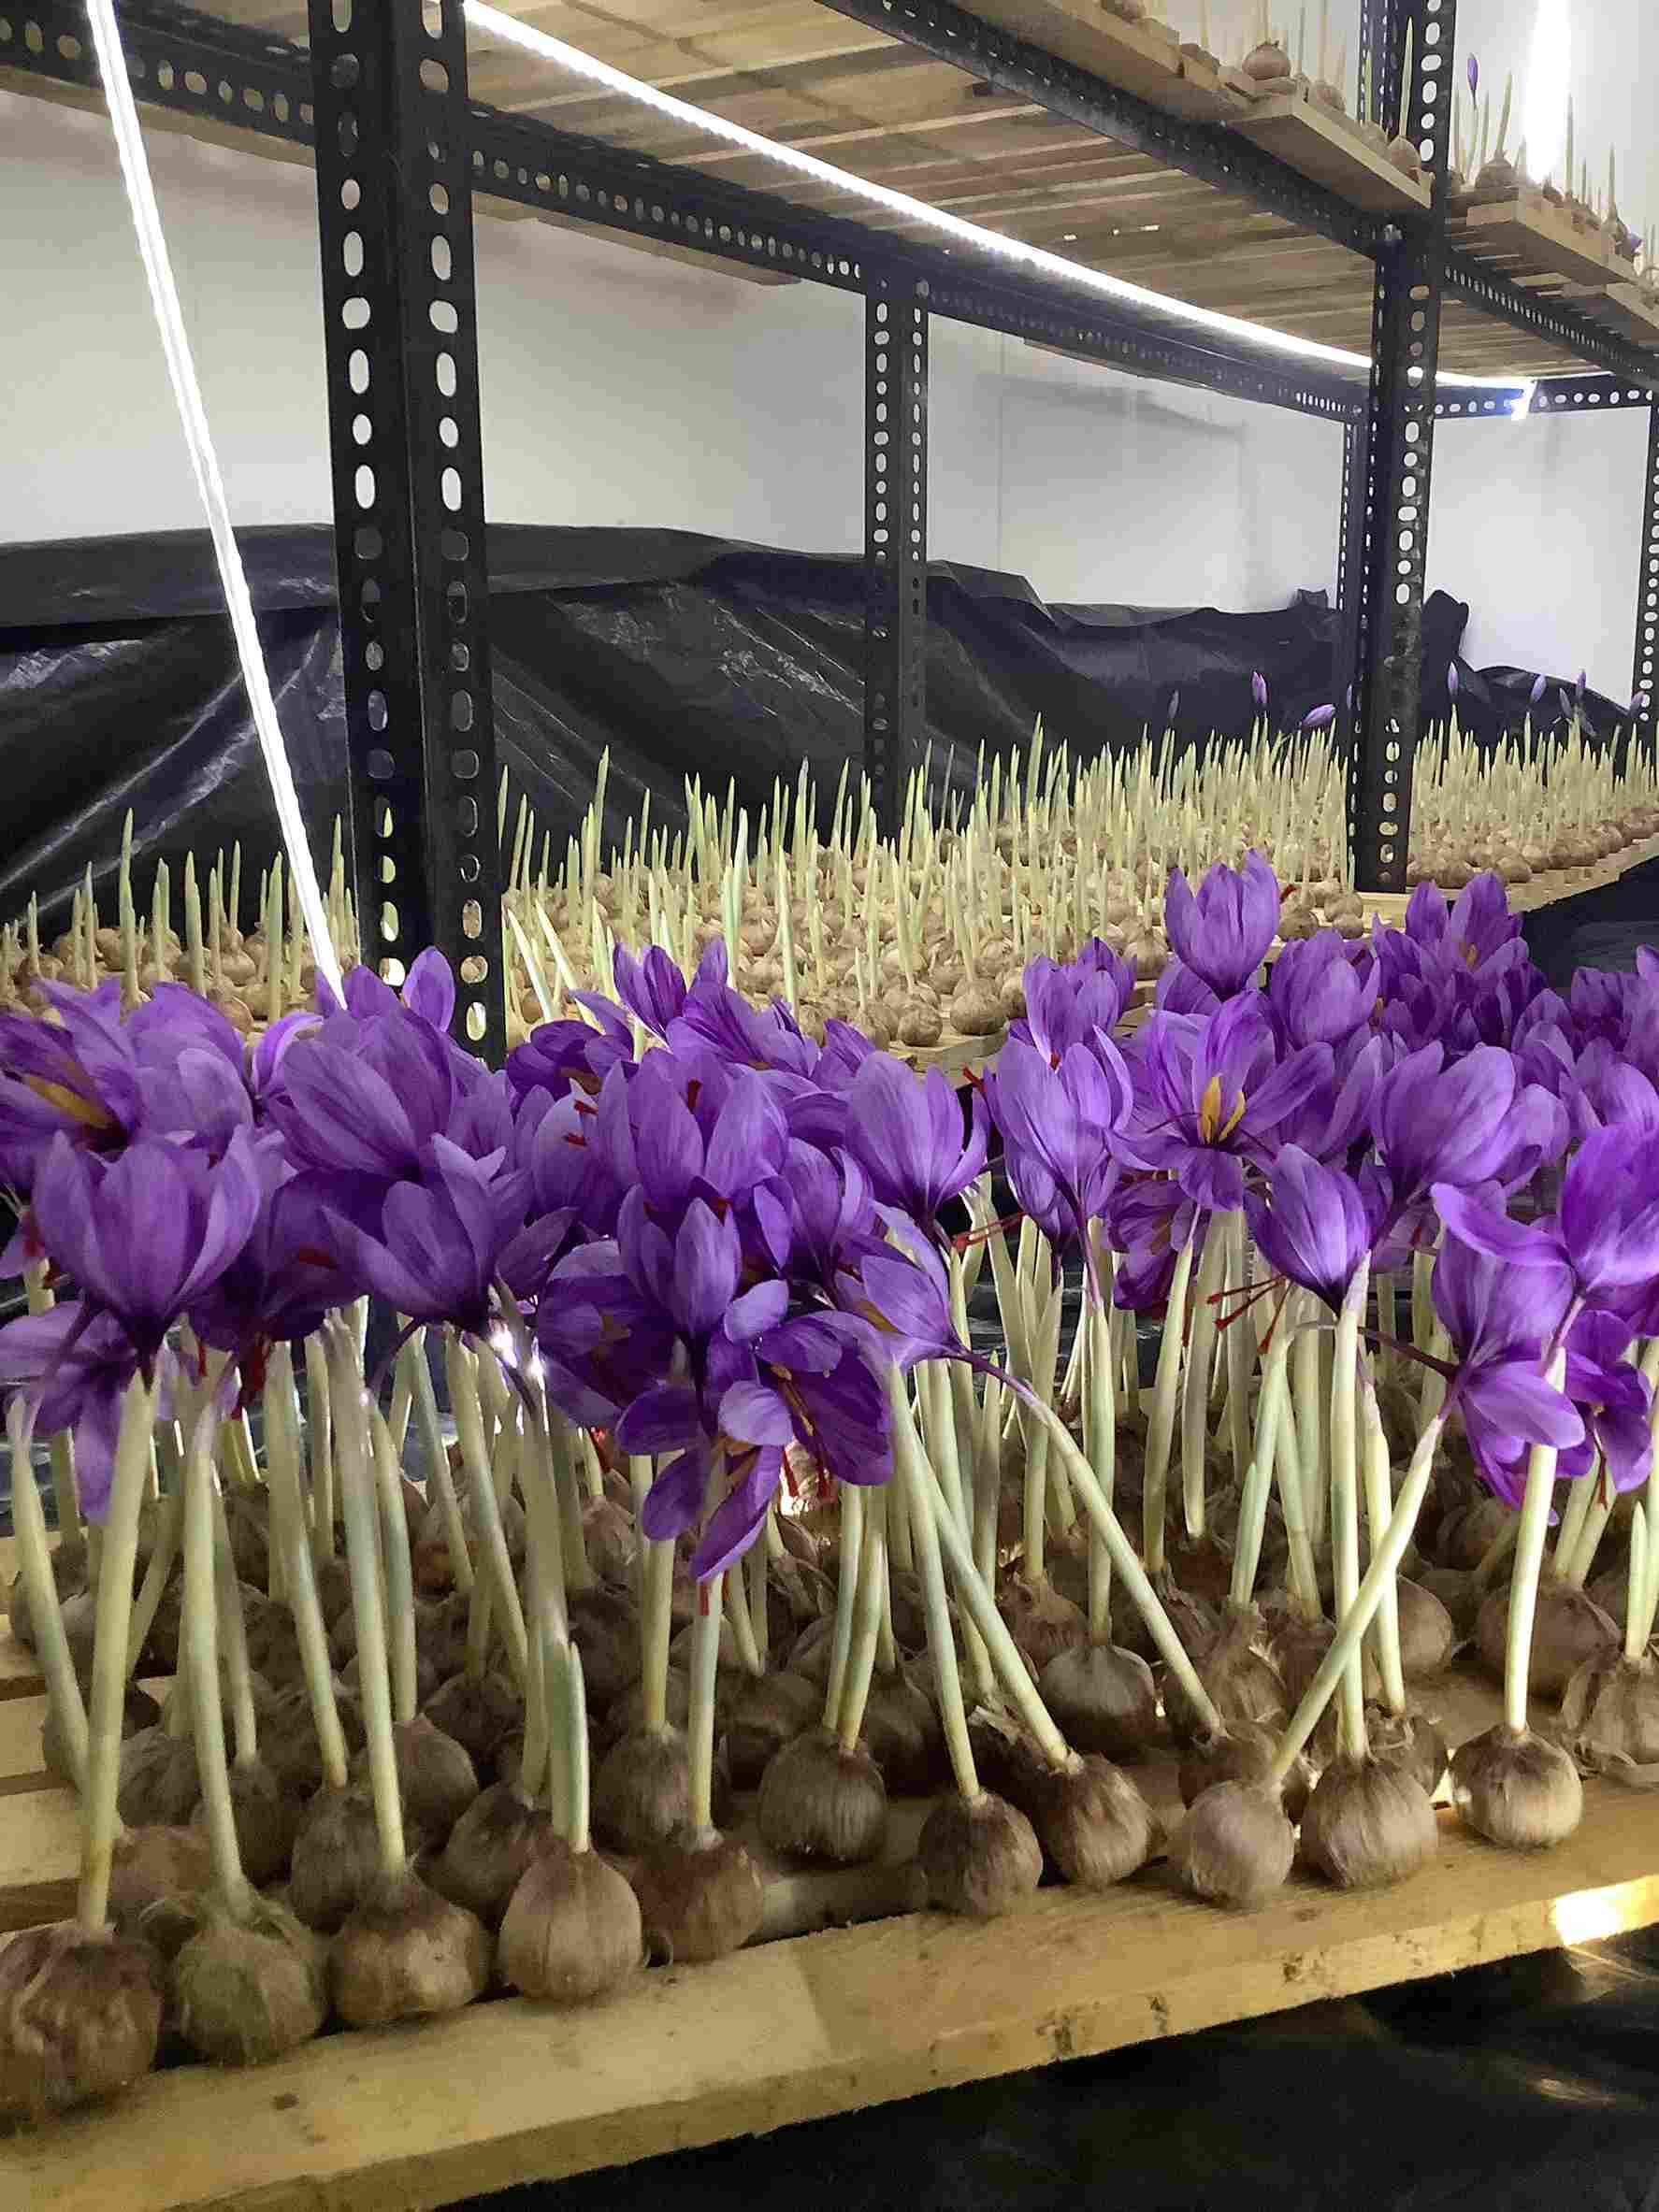 Saffron bulbs need an aeroponic environment to flourish